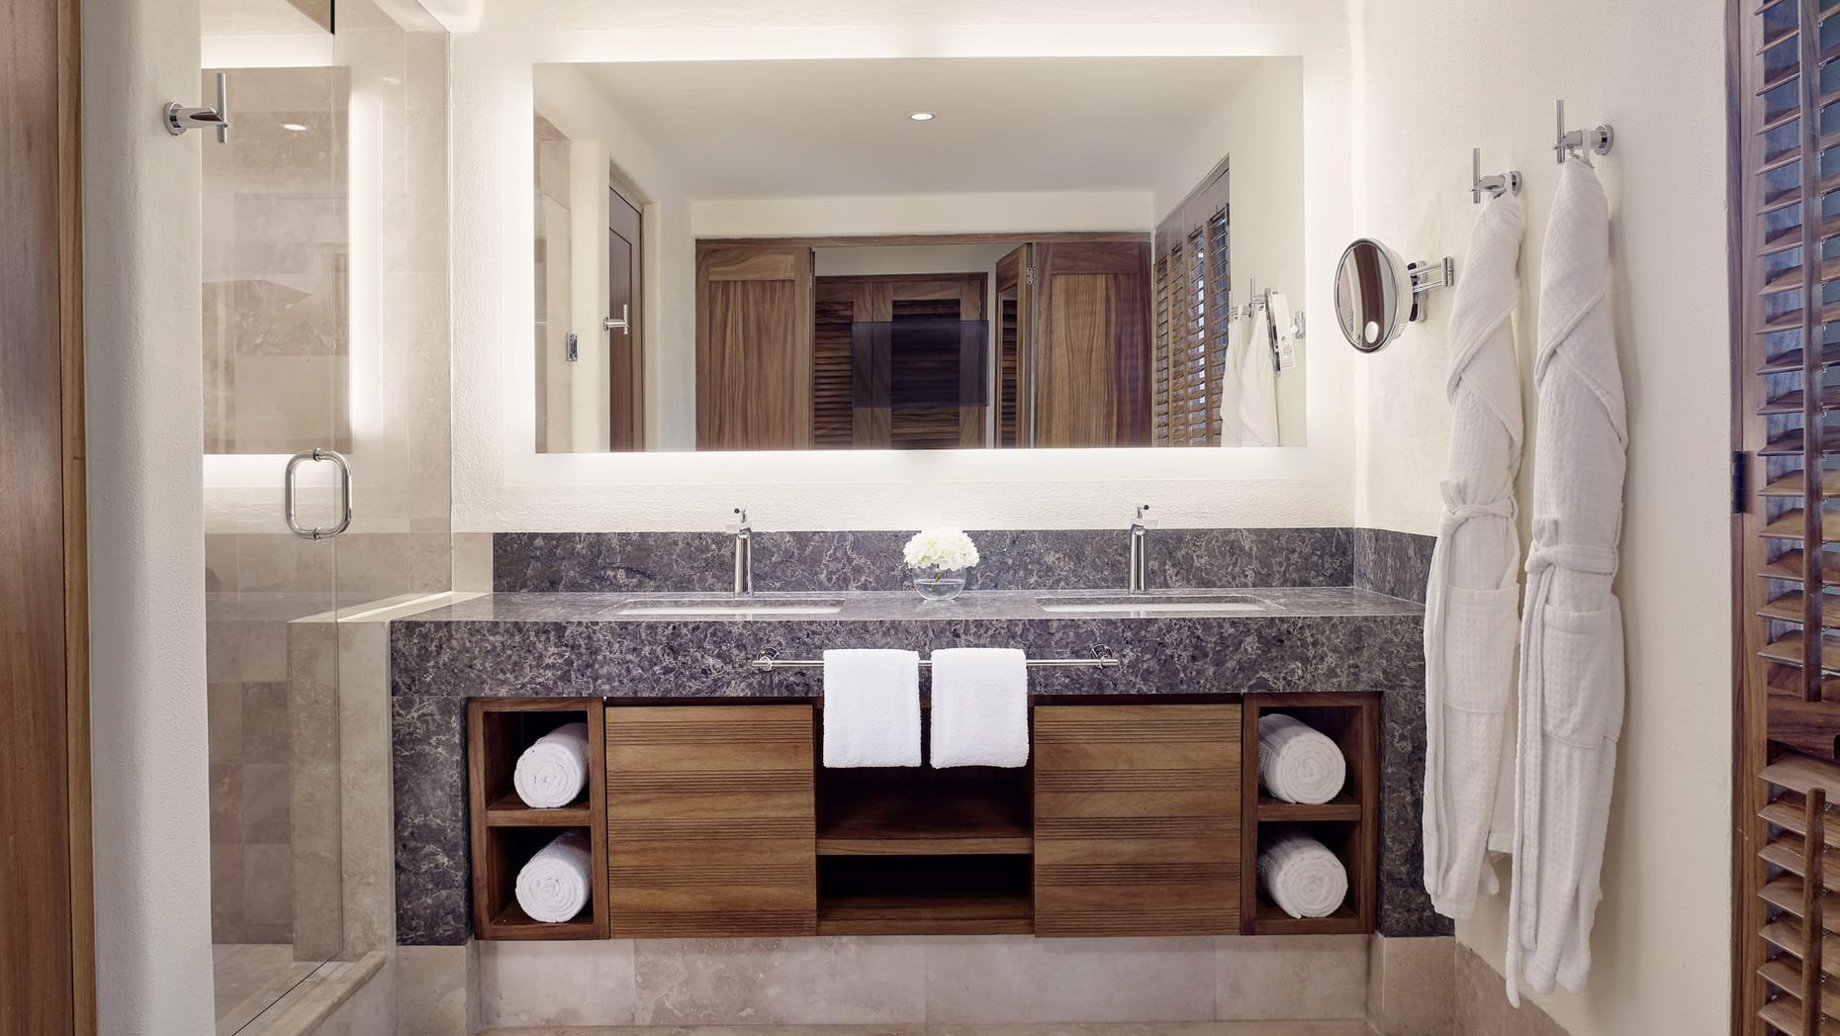 Four Seasons Resort Punta Mita – Nayarit, Mexico – Ocean View Penthouse Bathroom Mirror